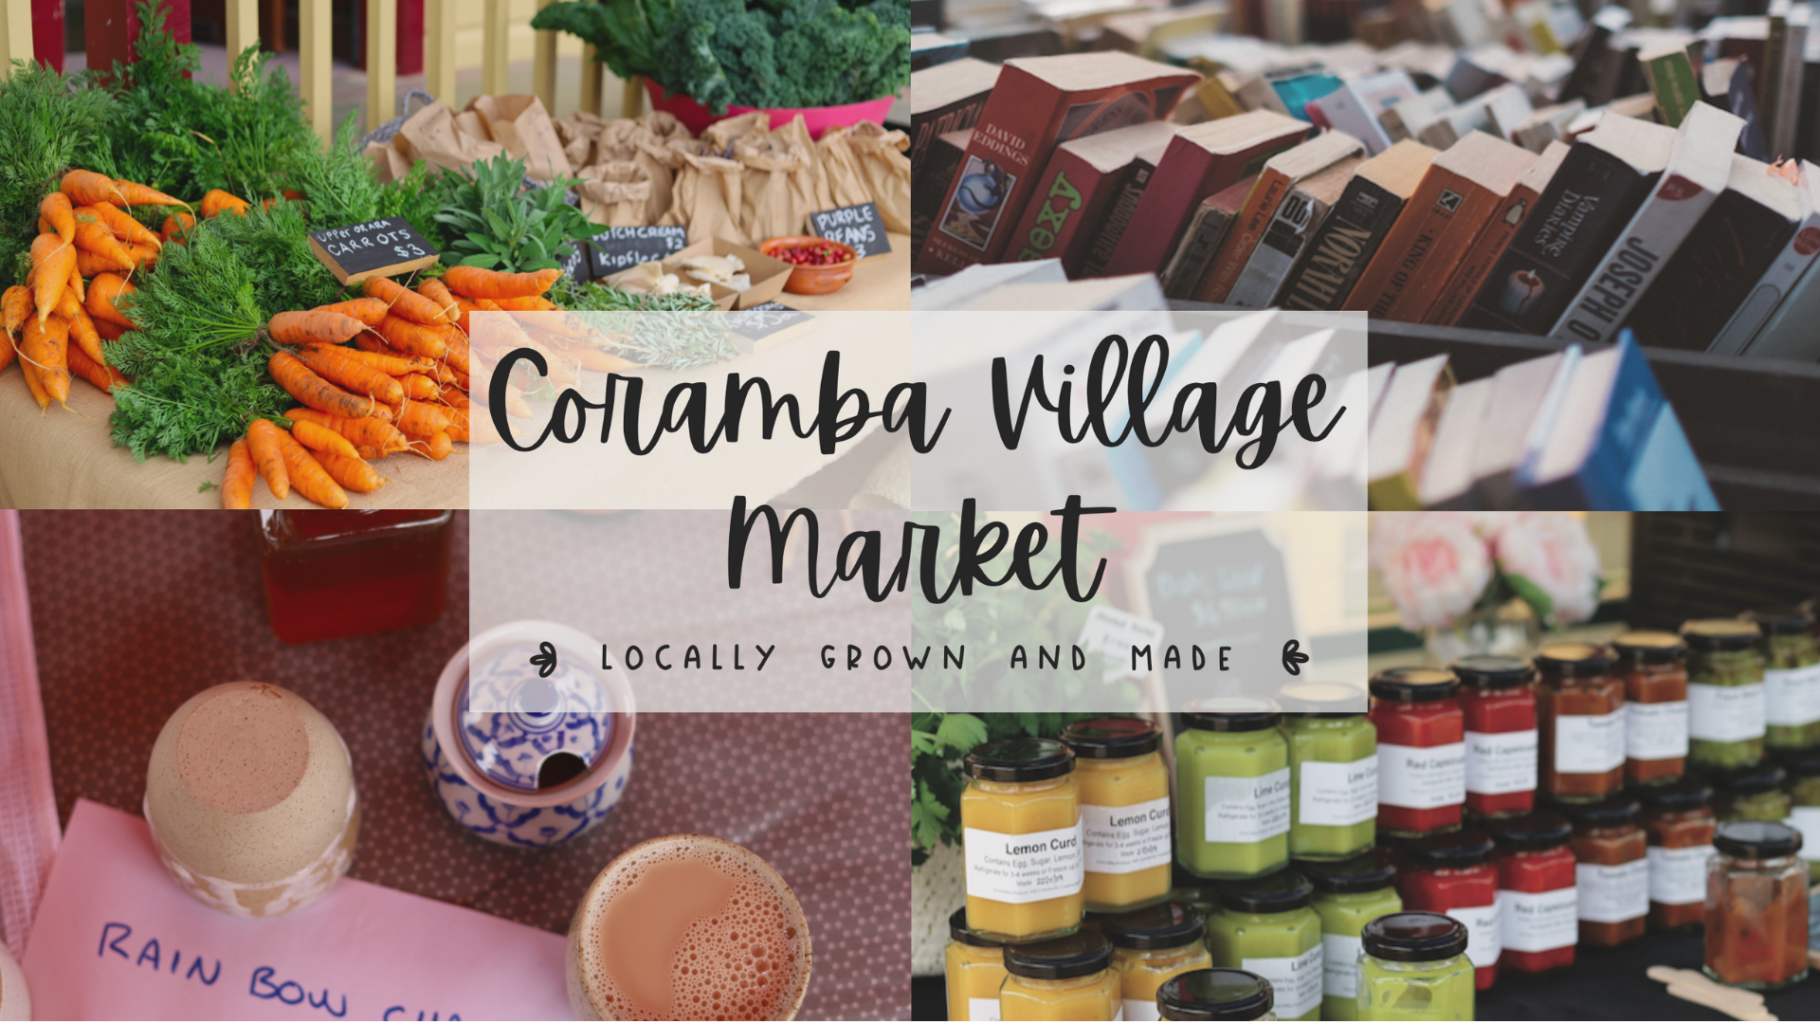 https://www.coffscoast.com.au/wp-content/uploads/2021/09/Coramba-Village-Market-1820x1024.png